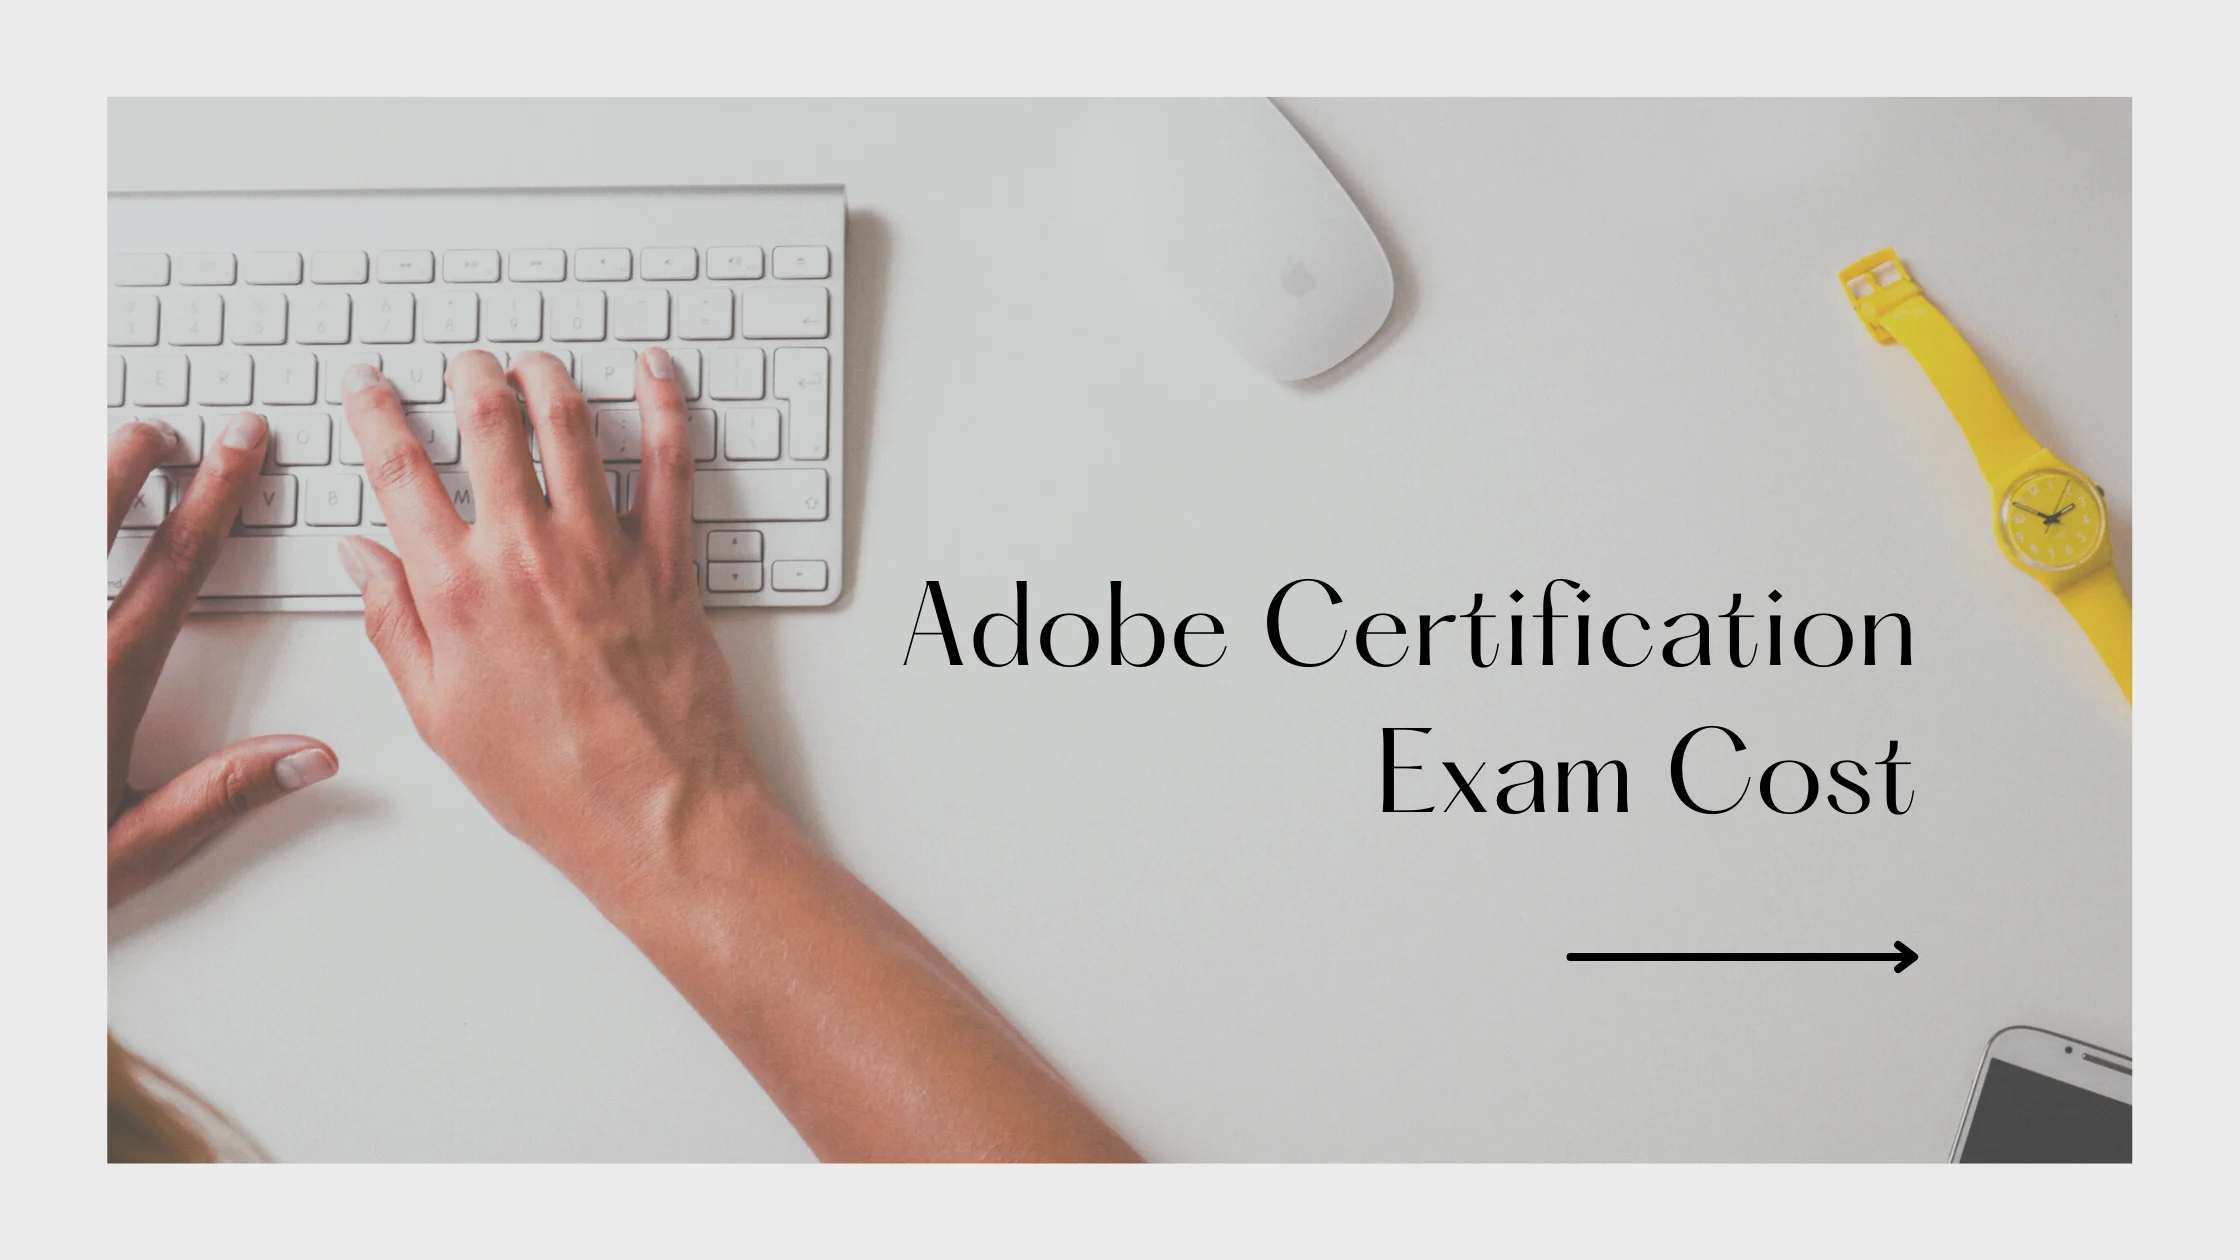 Adobe Certification Exam Cost success